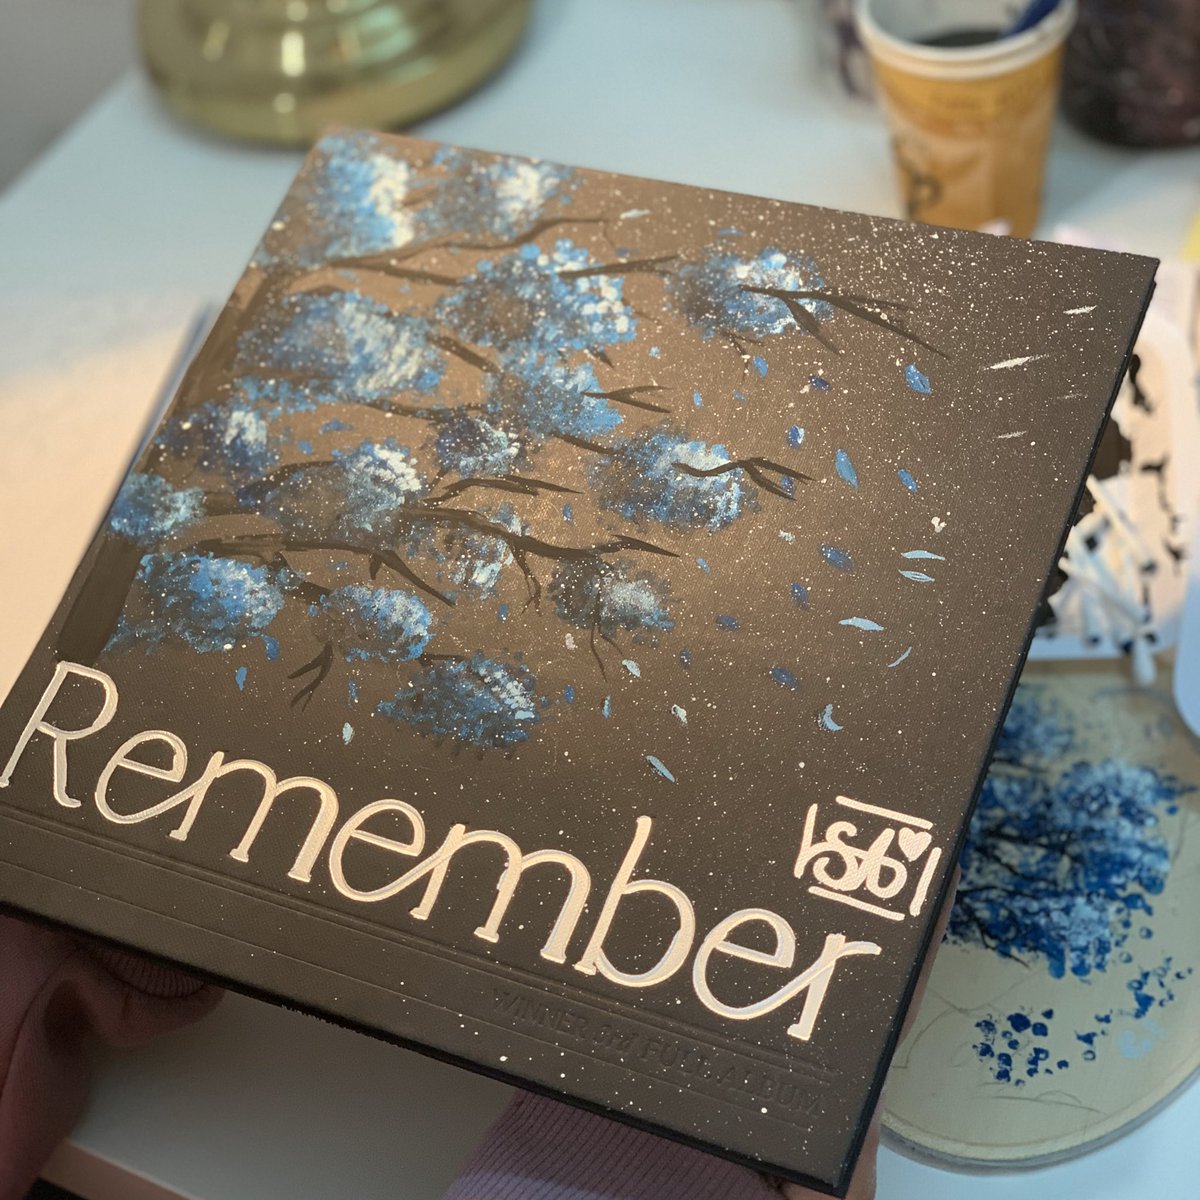 [EVENT] REMEMBER ALBUM Artwork by INNER CIRCLE  #PaintingREMEMBER_WINNER  #WINNER  #REMEMBER  #위너 @yginnercircle  @yg_winnercity